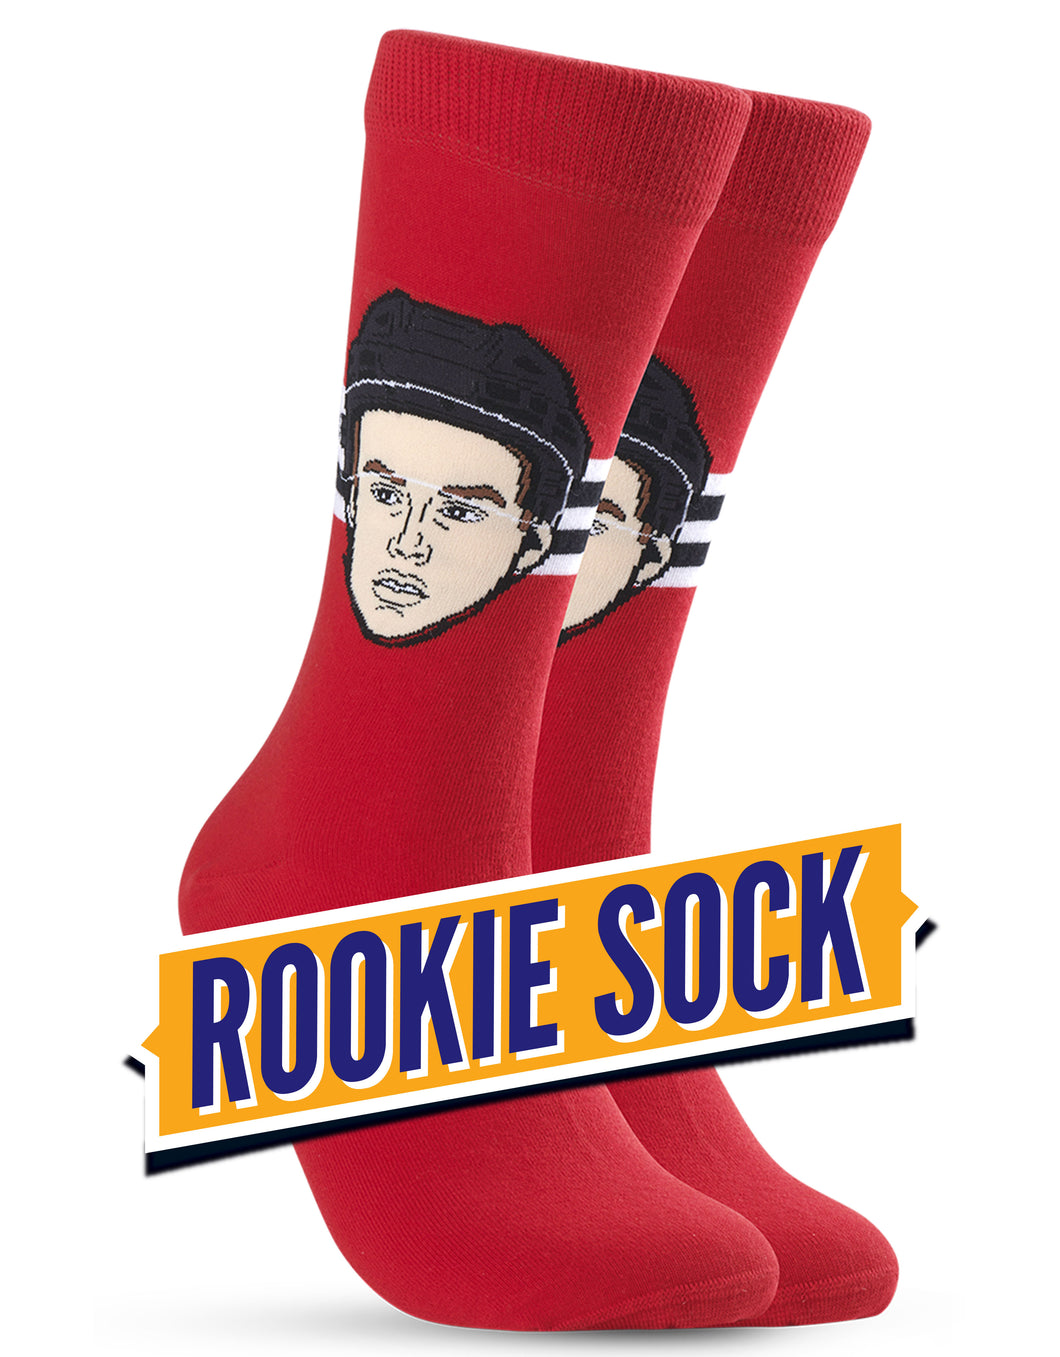 Connor Bedard - Rookie Sock